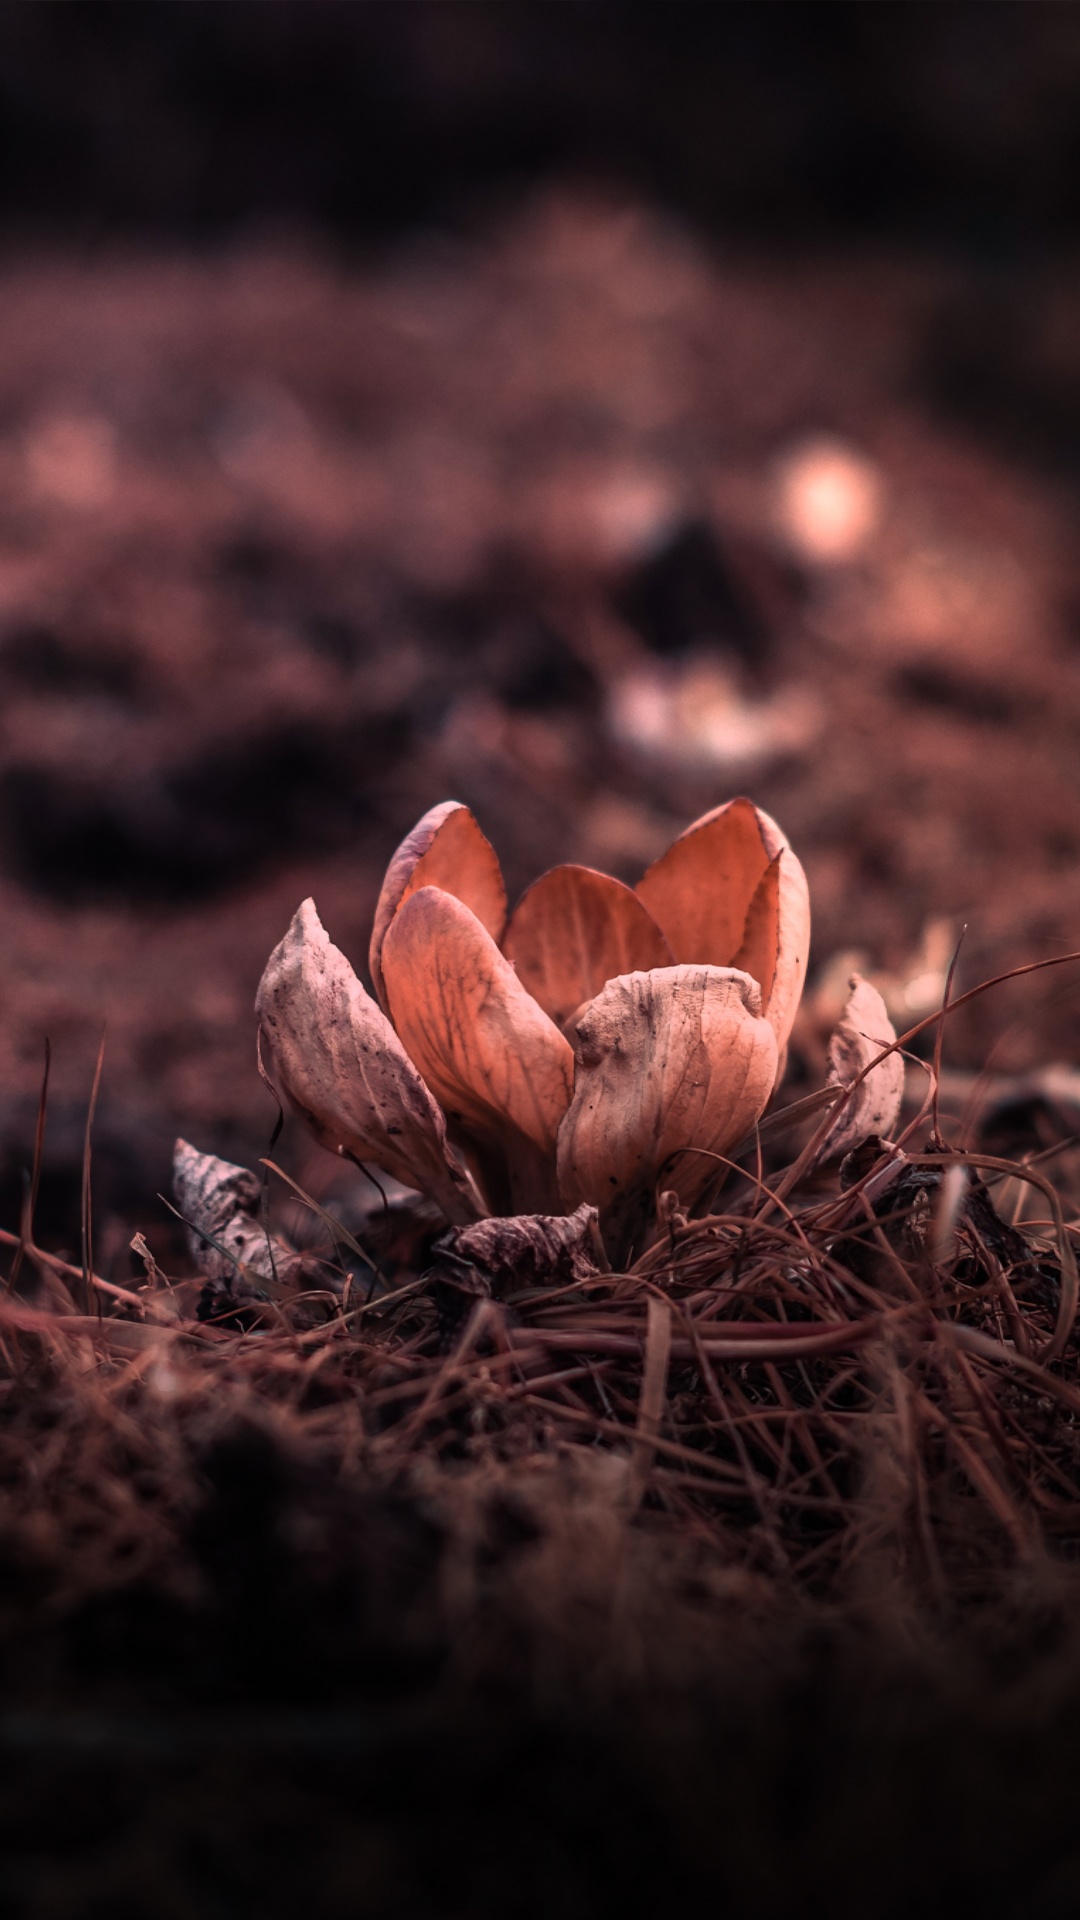 Brown Mushrooms on Brown Dried Leaves. Wallpaper in 1080x1920 Resolution